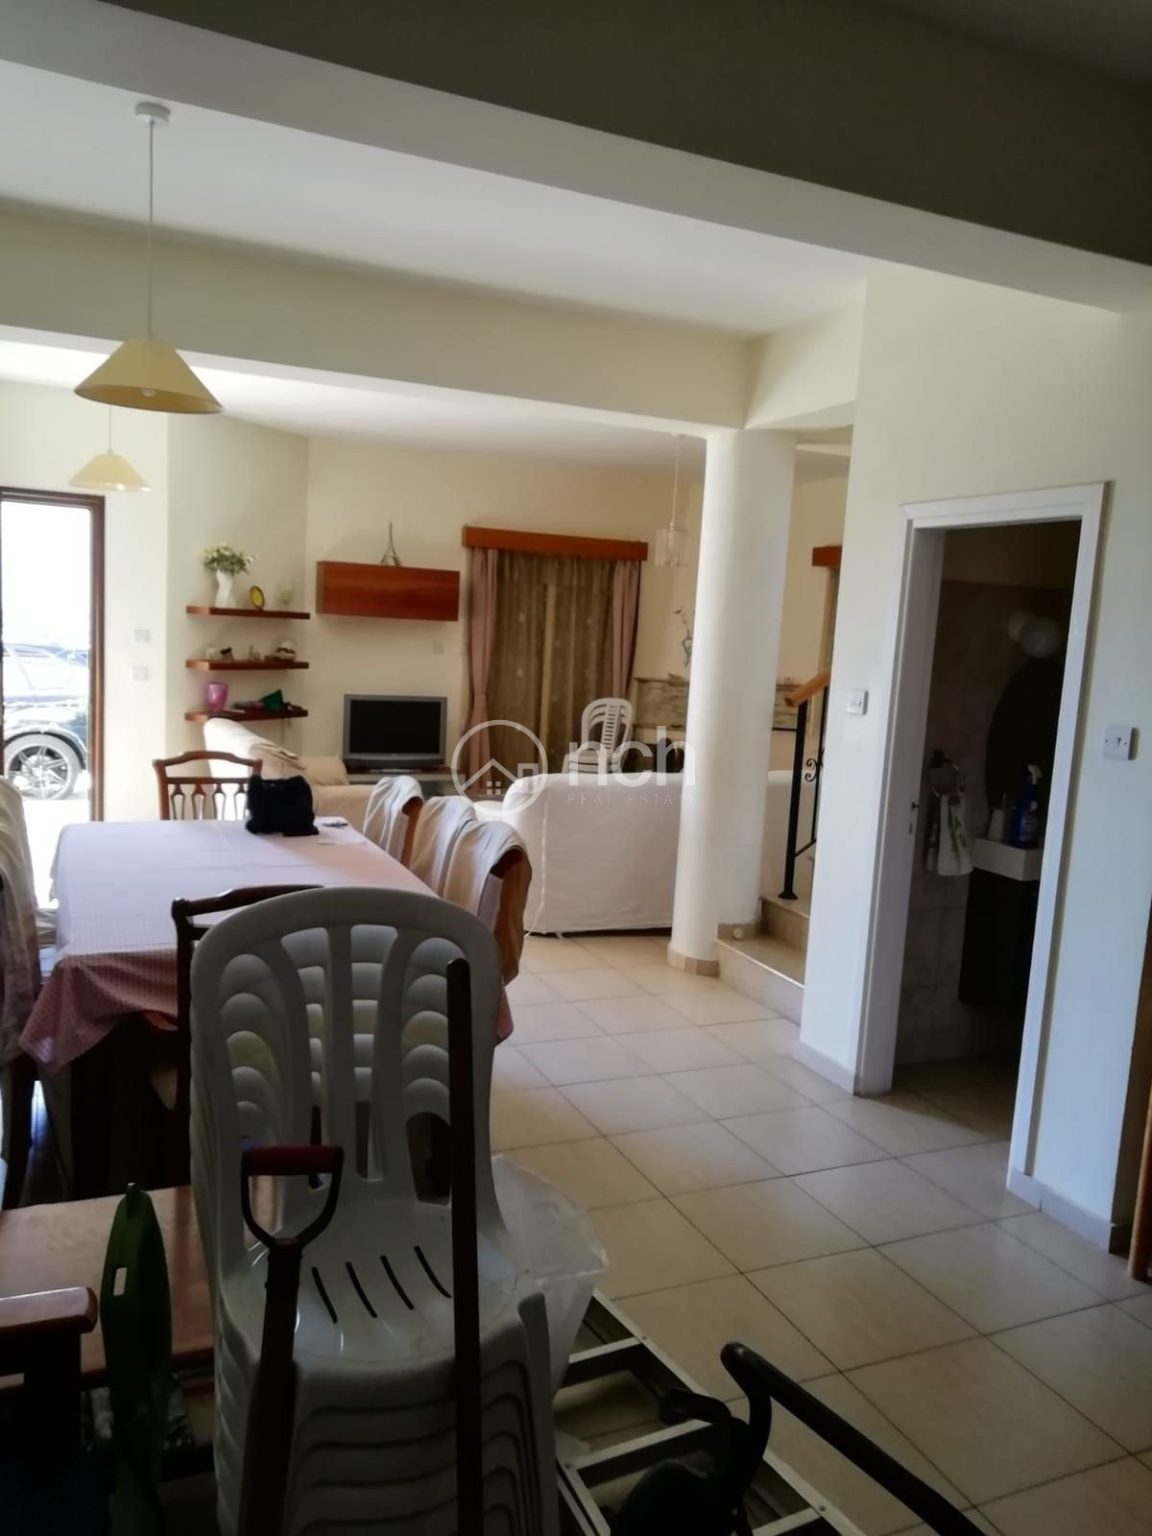 4 Bedroom Villa for Rent in Ypsonas, Limassol District